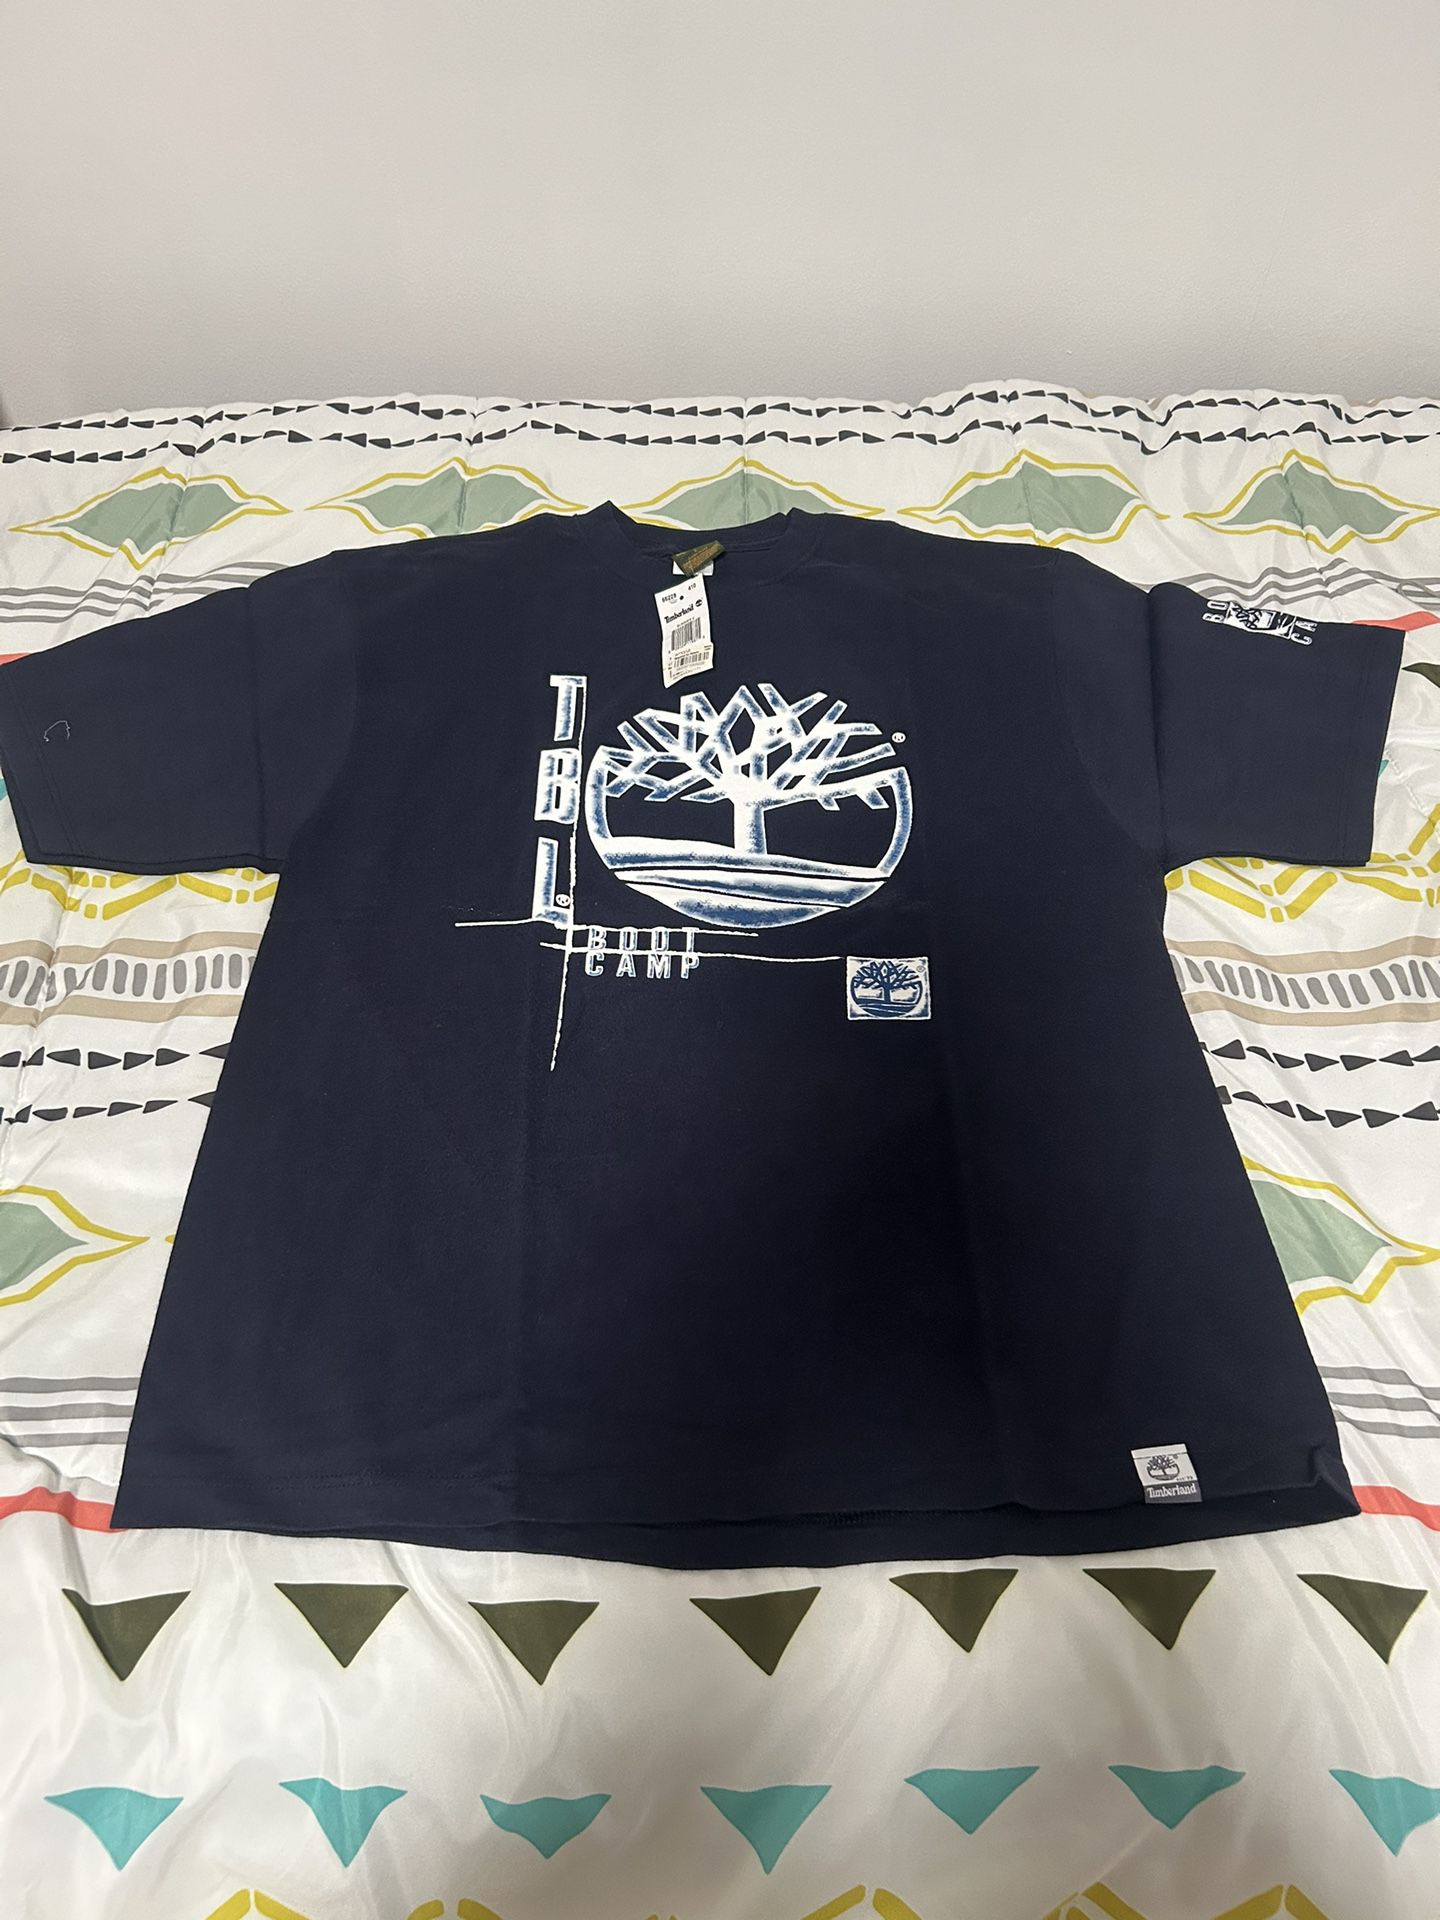 NEW Men’s Timberland Shirt 